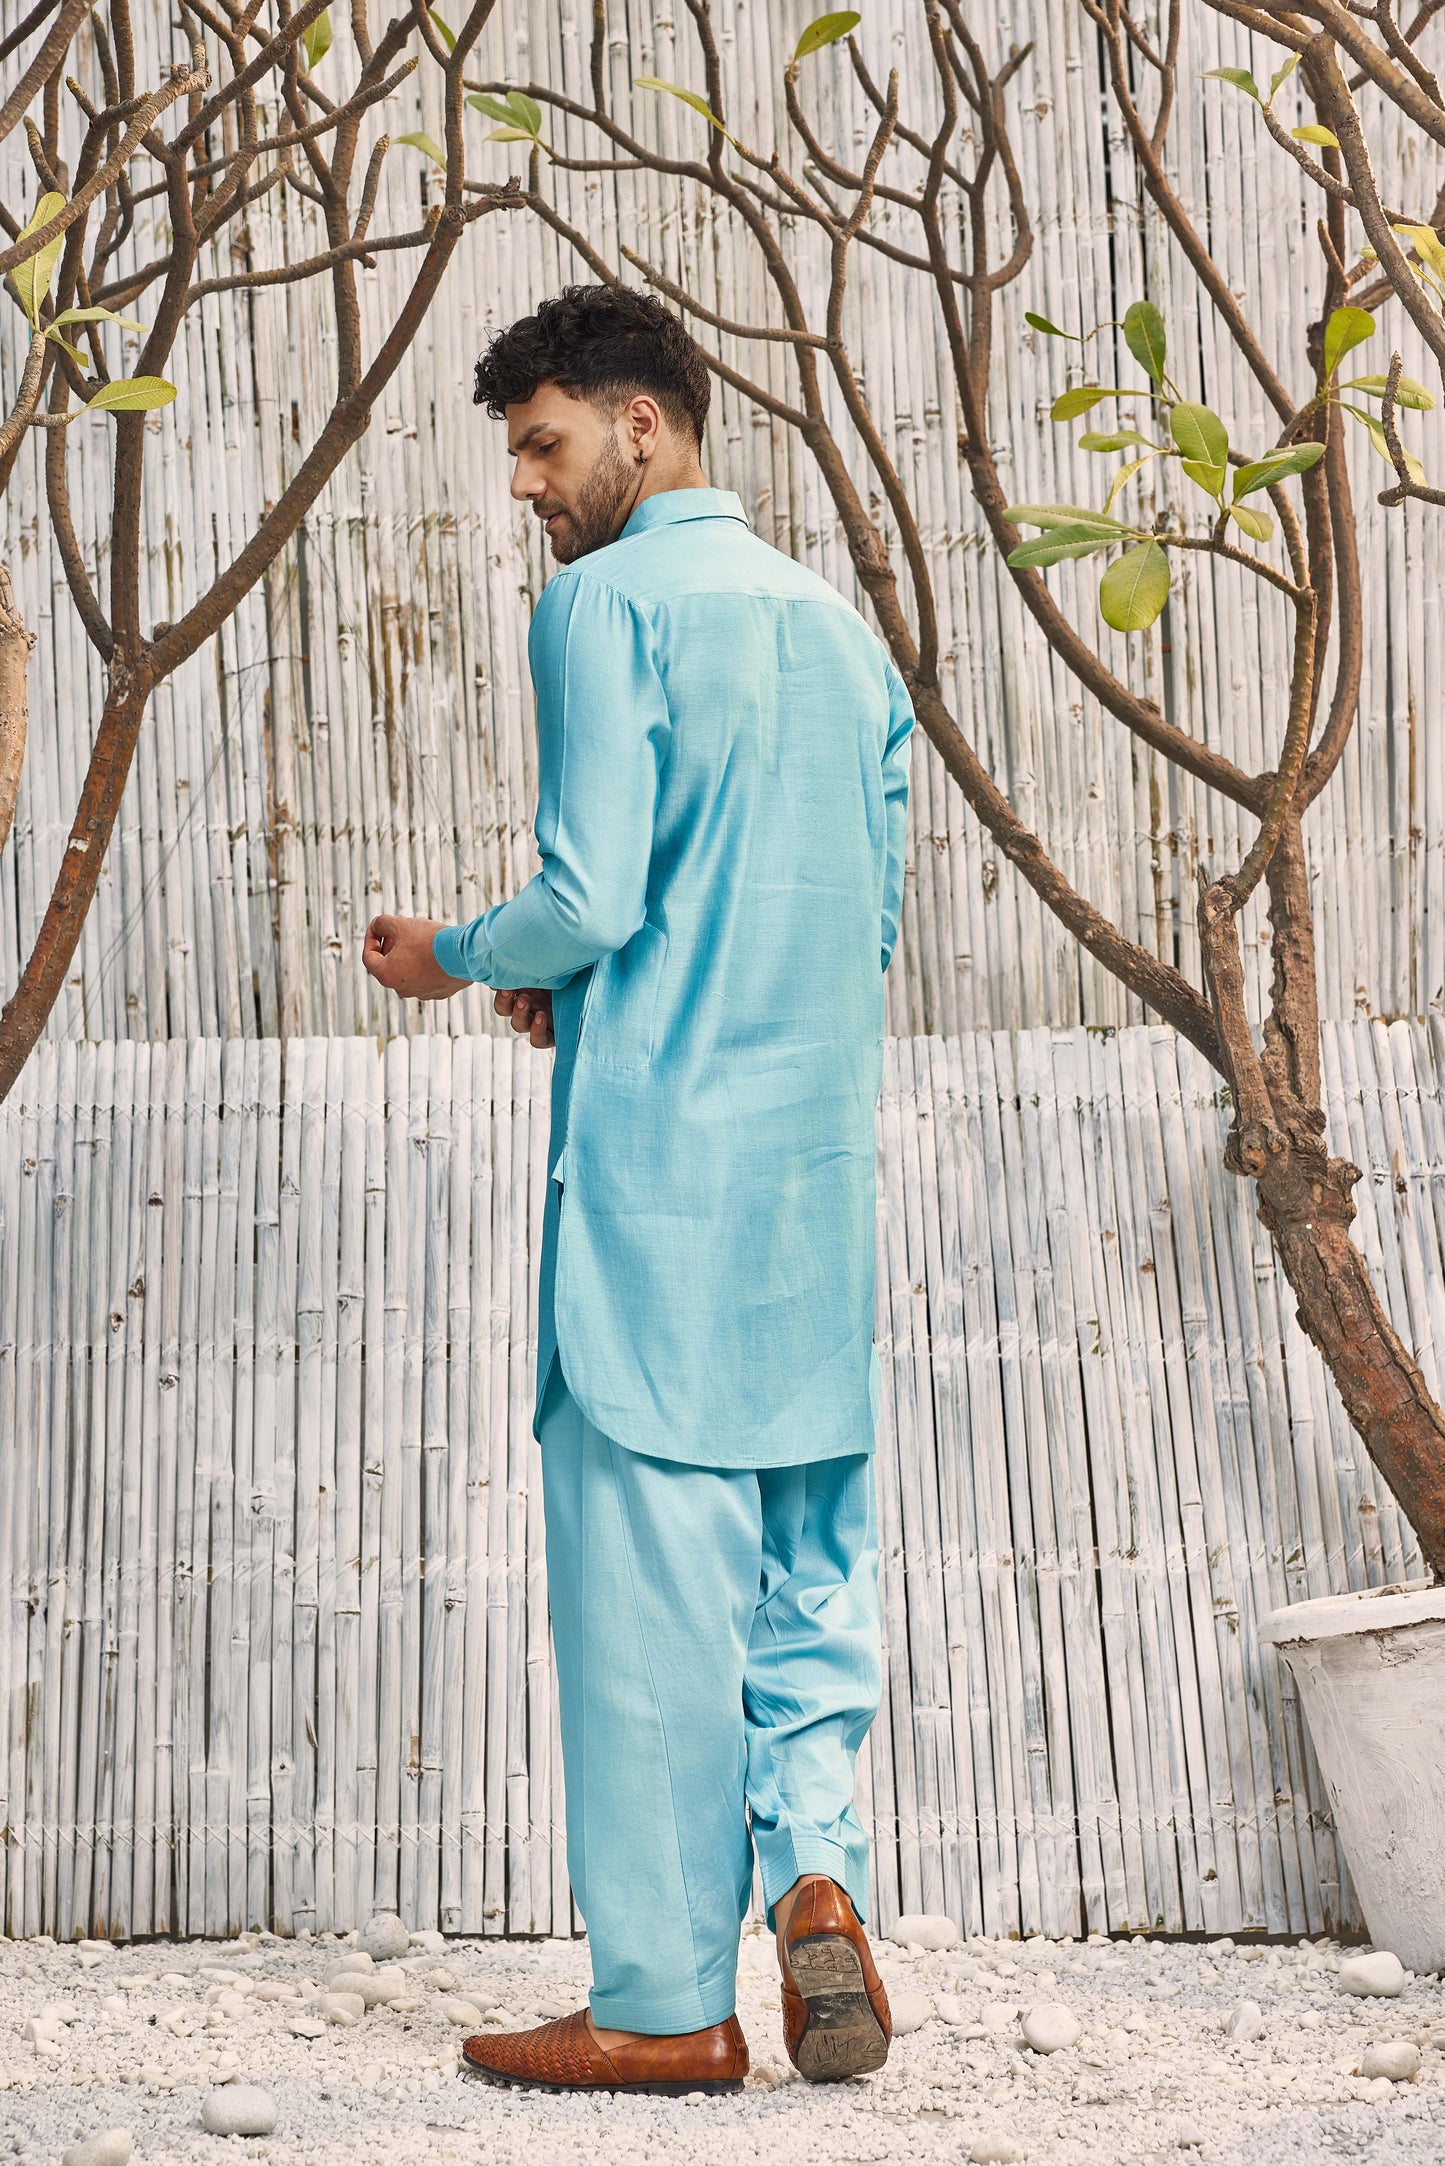 Chanderi Bundi Jacket - Blue at Kamakhyaa by Charkhee. This item is Blue, Cotton, Festive Wear, Indian Wear, Indianwear Jackets, Jackets, Mens Overlay, Menswear, Natural, Regular Fit, Schiffli, Shores 23, Textured